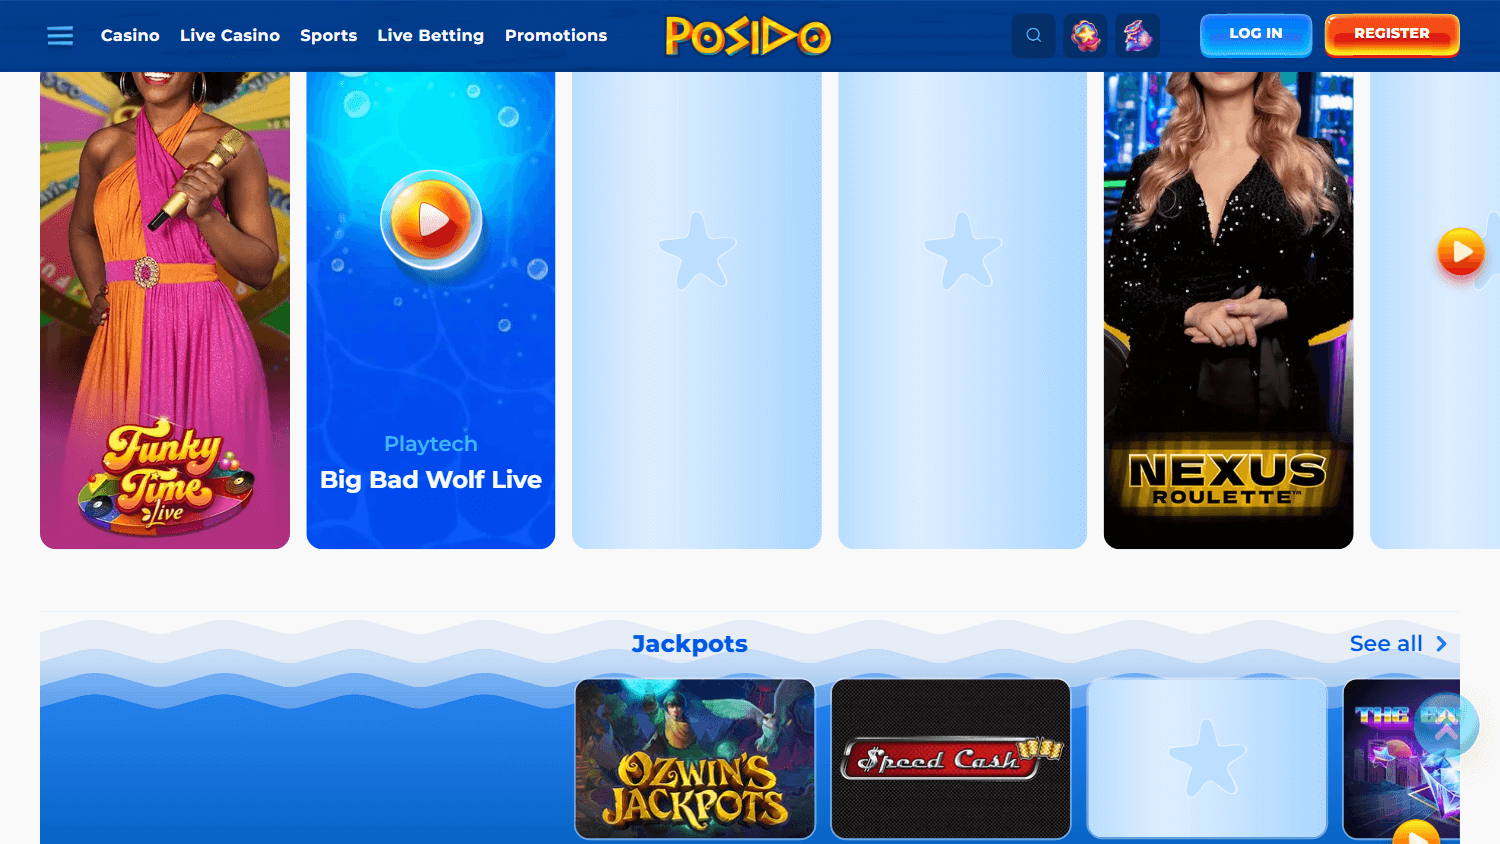 posido_casino_homepage_desktop